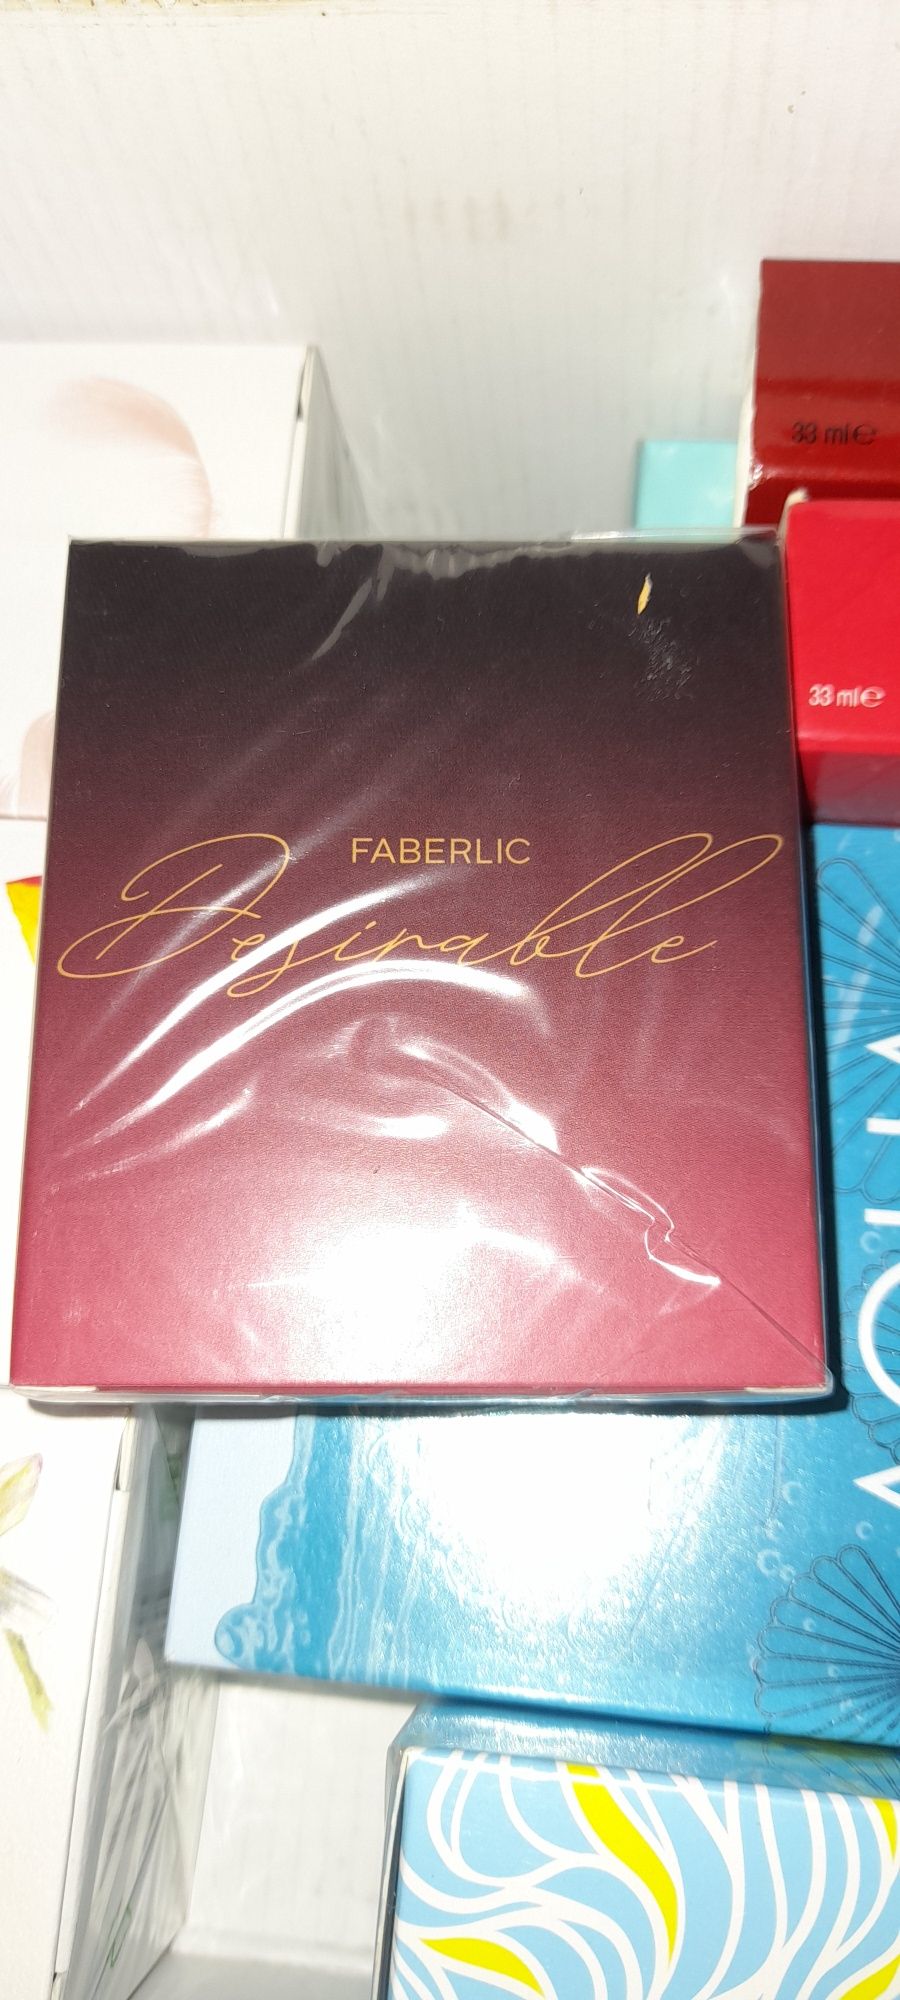 Faberlic desirable